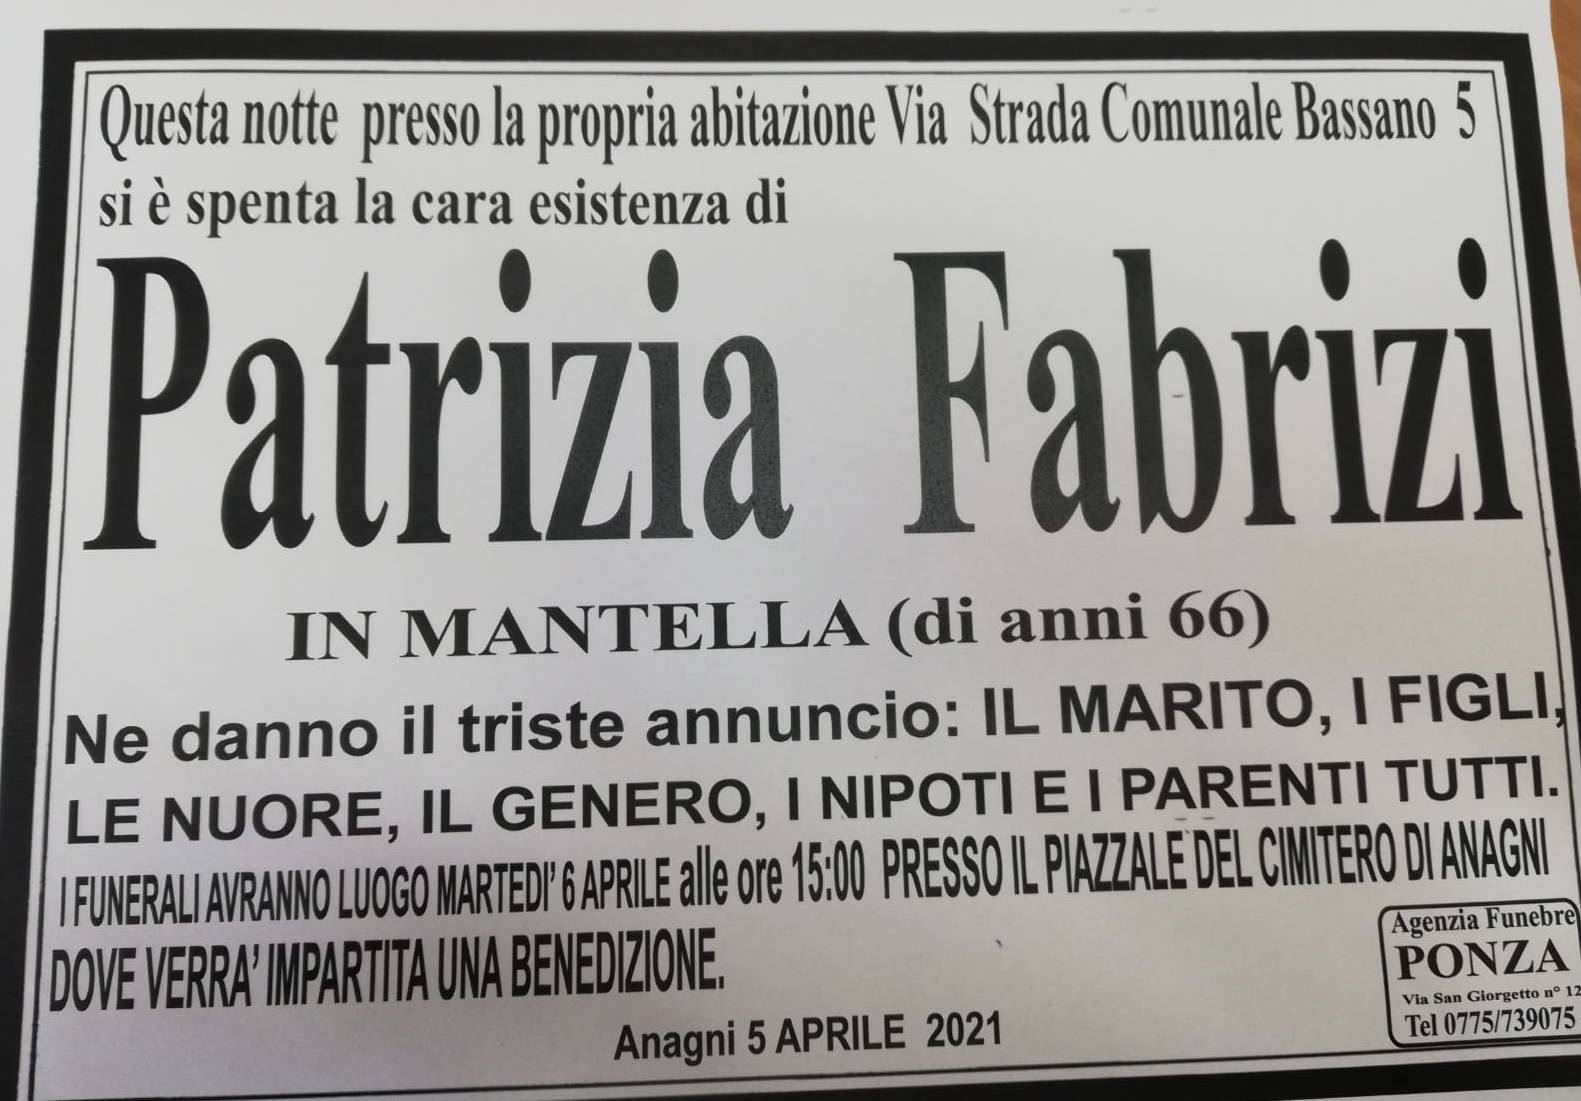 Patrizia Fabrizi